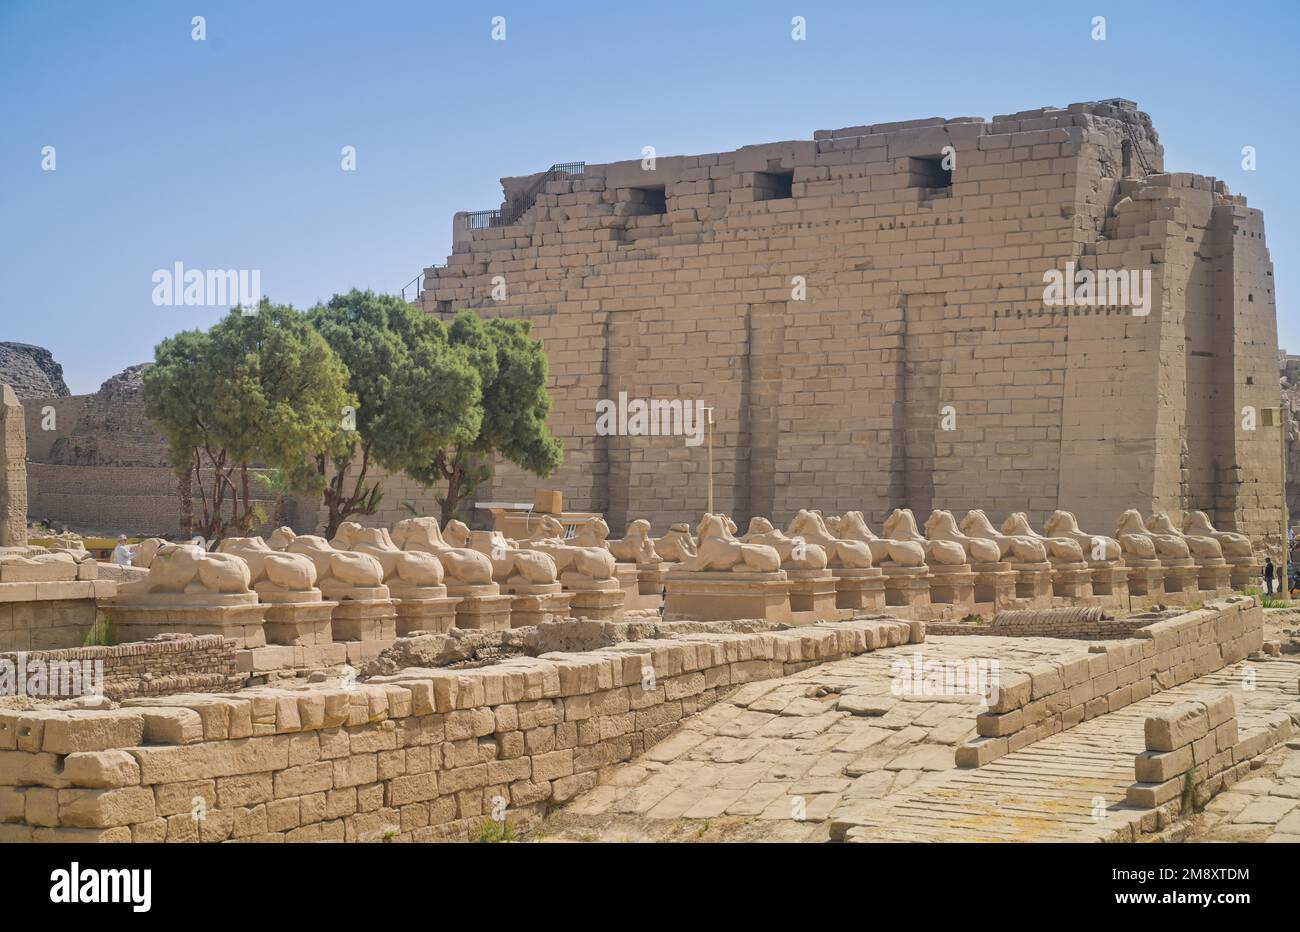 Phinx alley, ram-headed sphinxes in front of the 1st pylon, Karnak temple, Karnak, Egypt Stock Photo